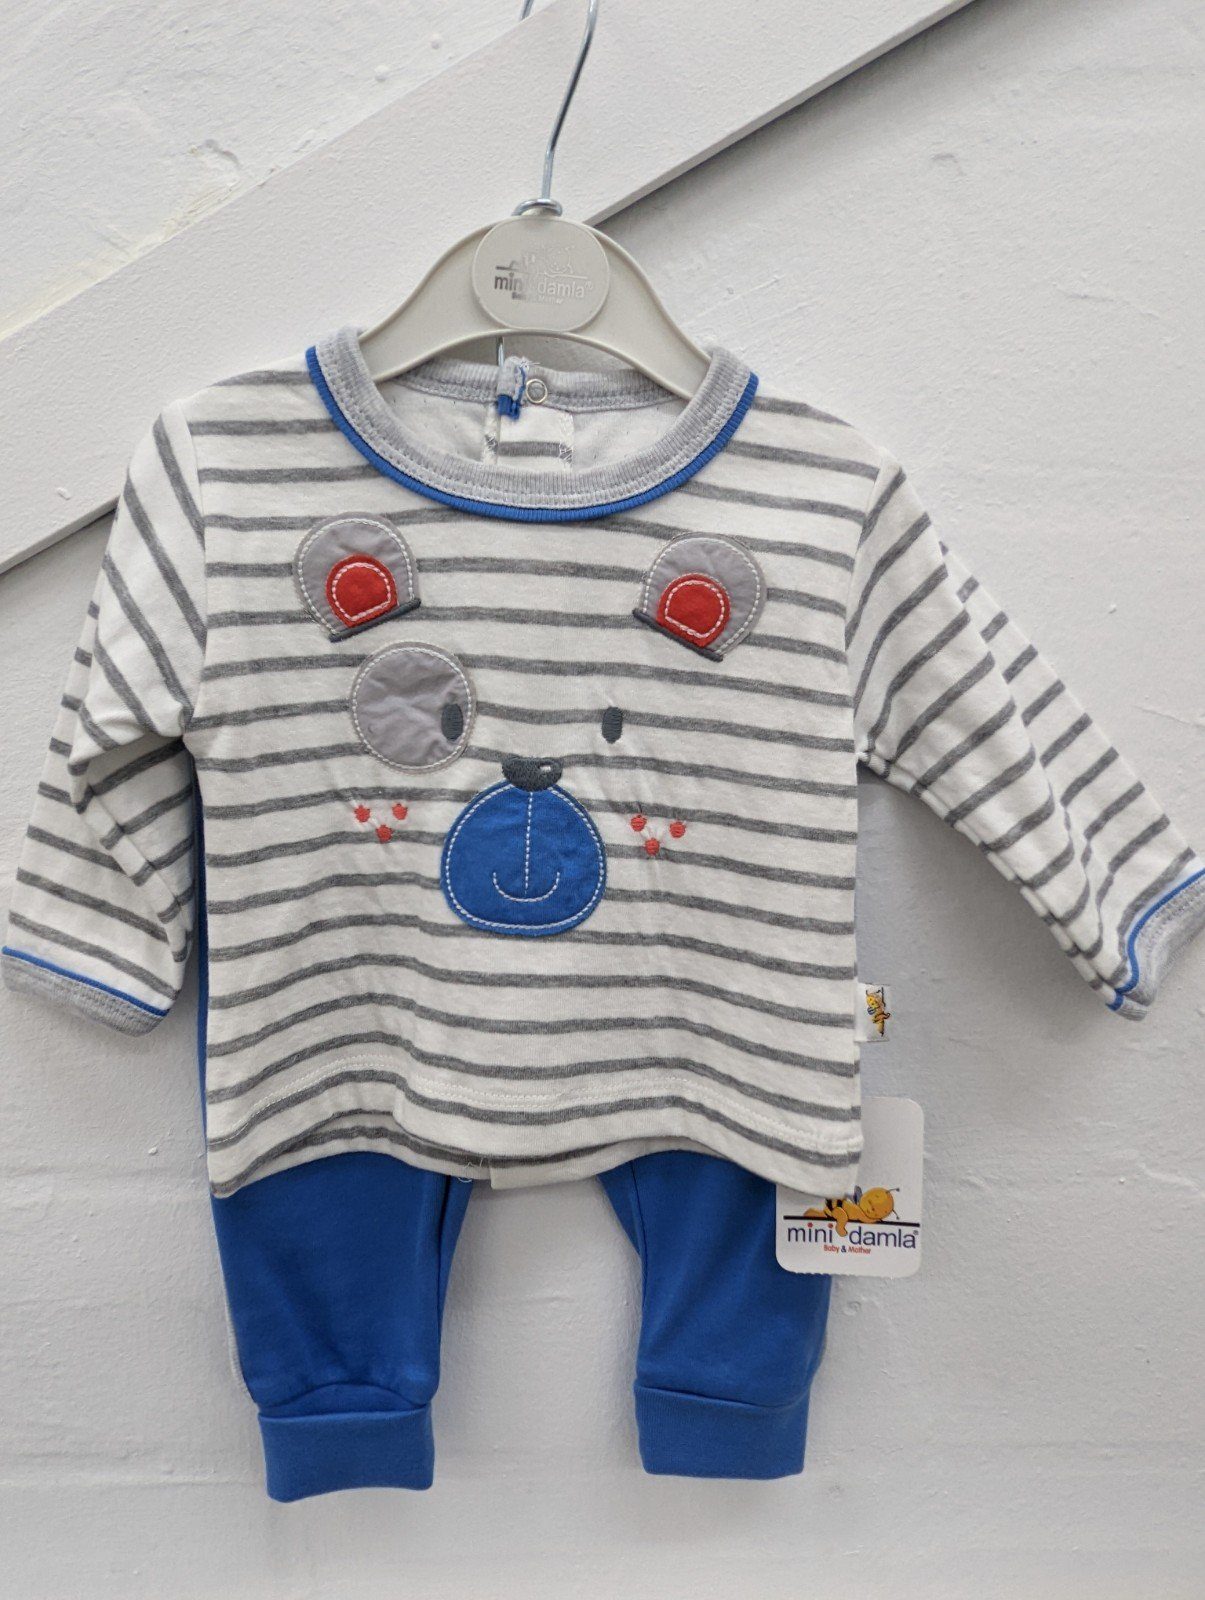 Blau damla Set Anzug 2-teilig mini Baby